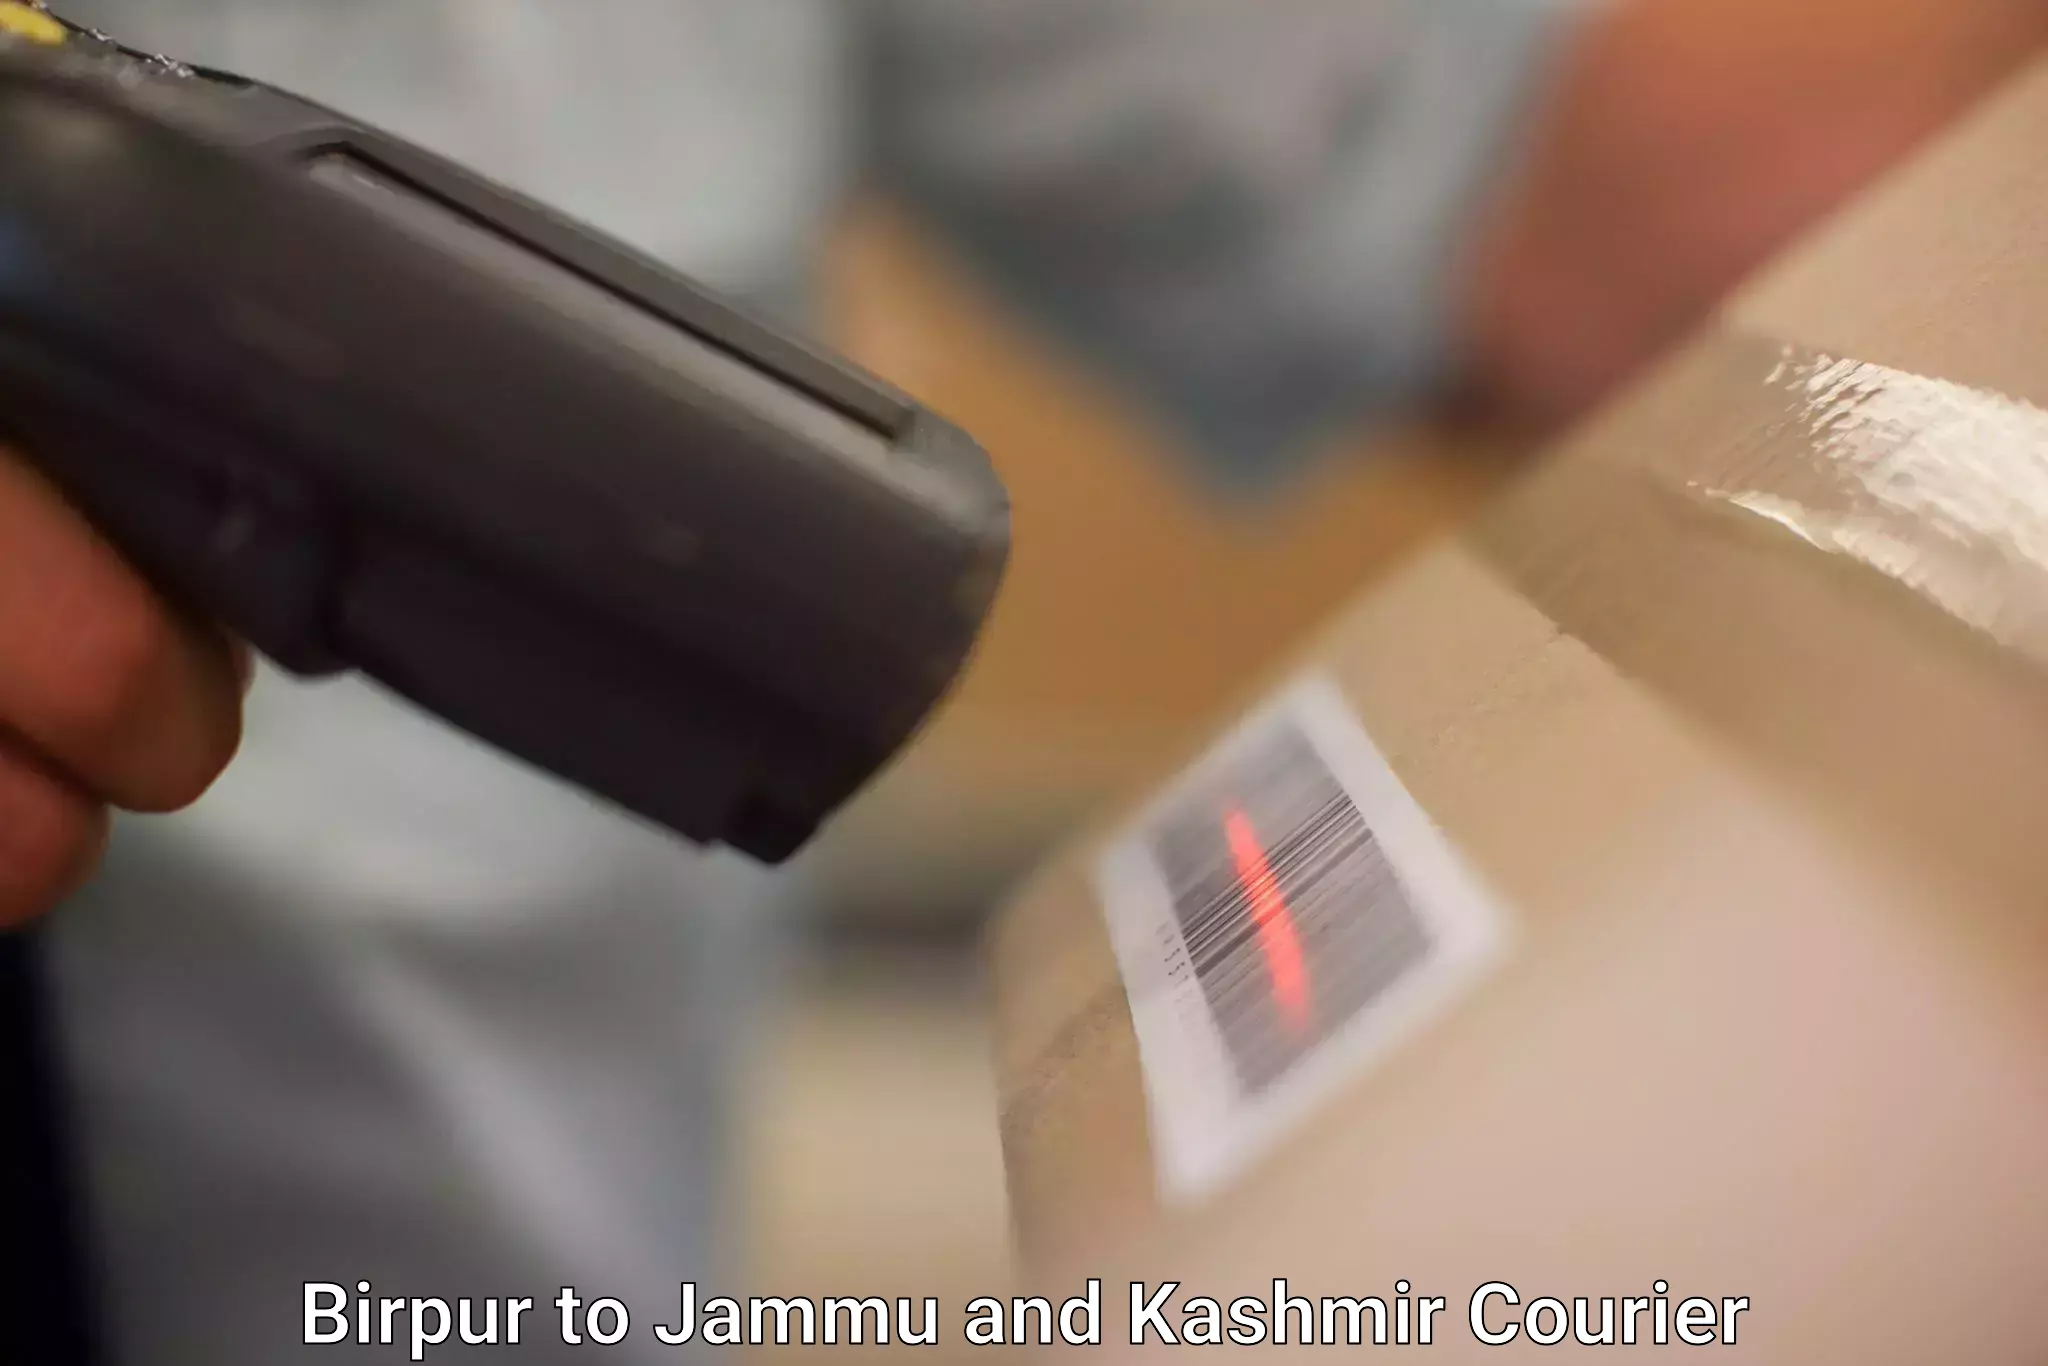 Smart shipping technology Birpur to Jammu and Kashmir